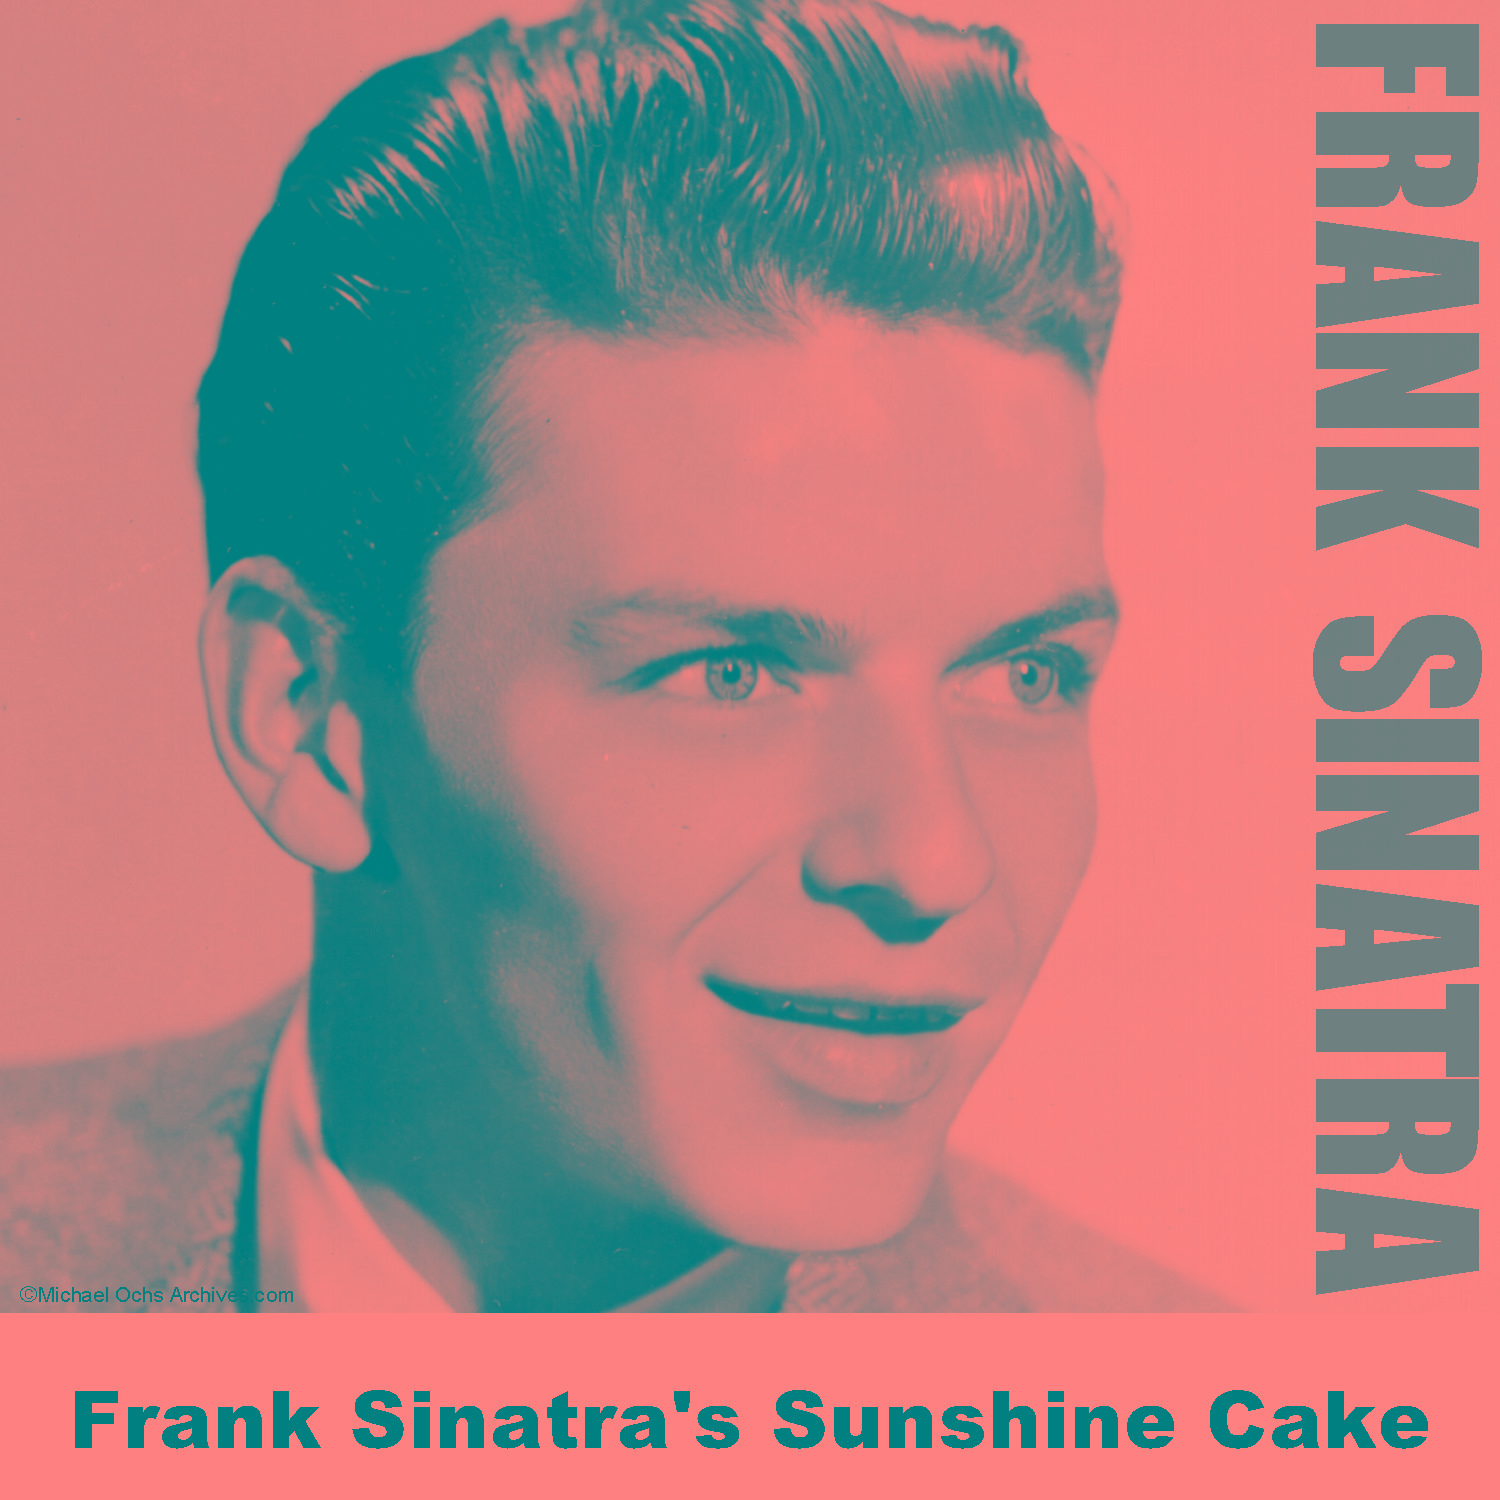 Frank Sinatra's Sunshine Cake